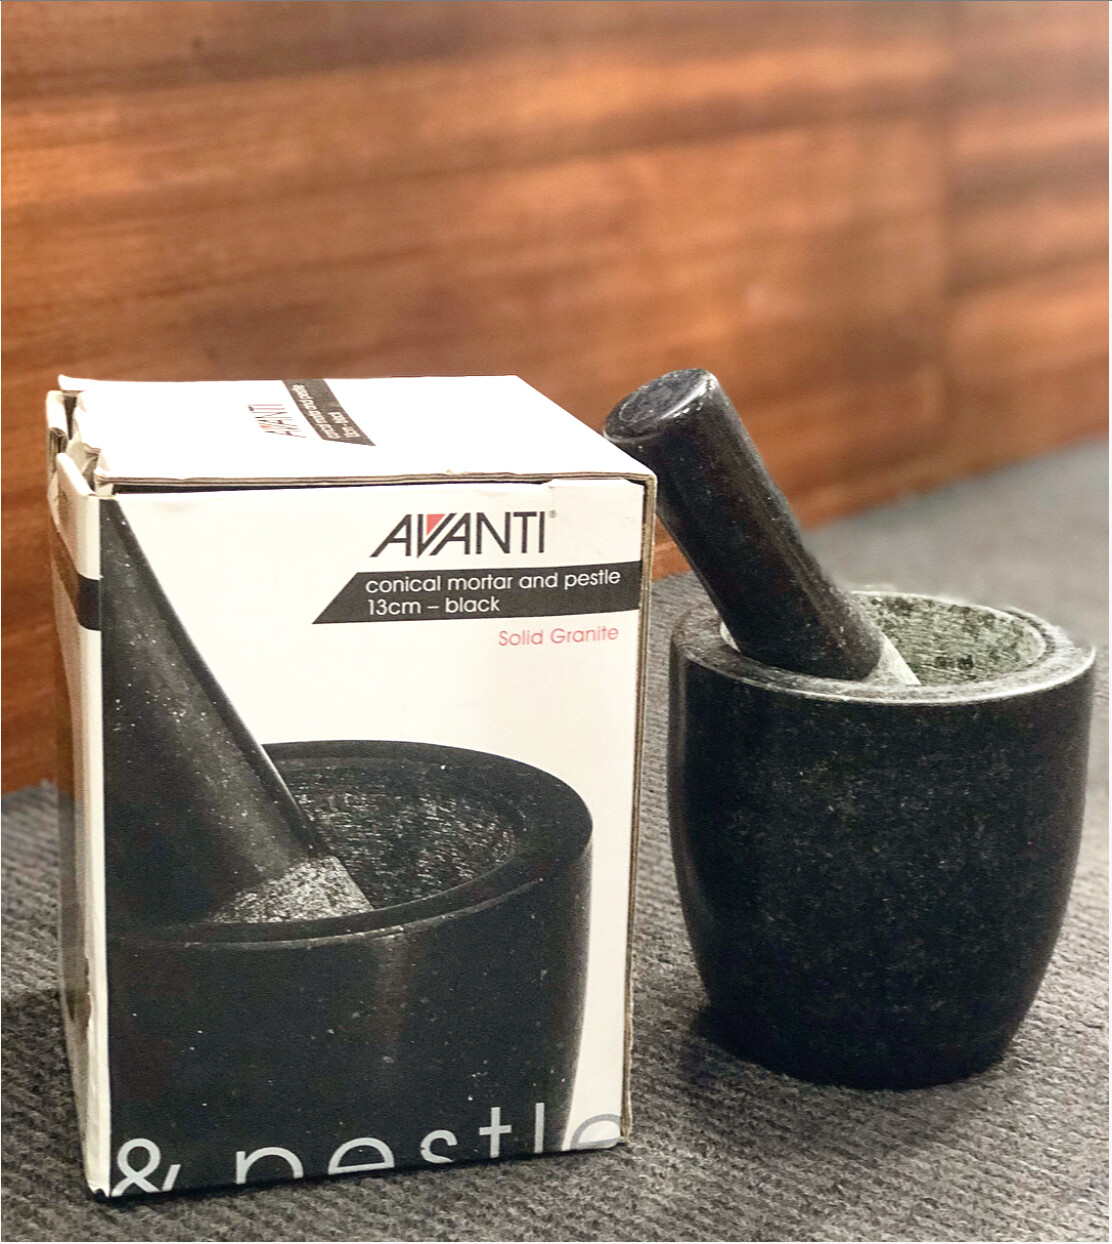 AVANTI - conical mortar and pestle 13cm black